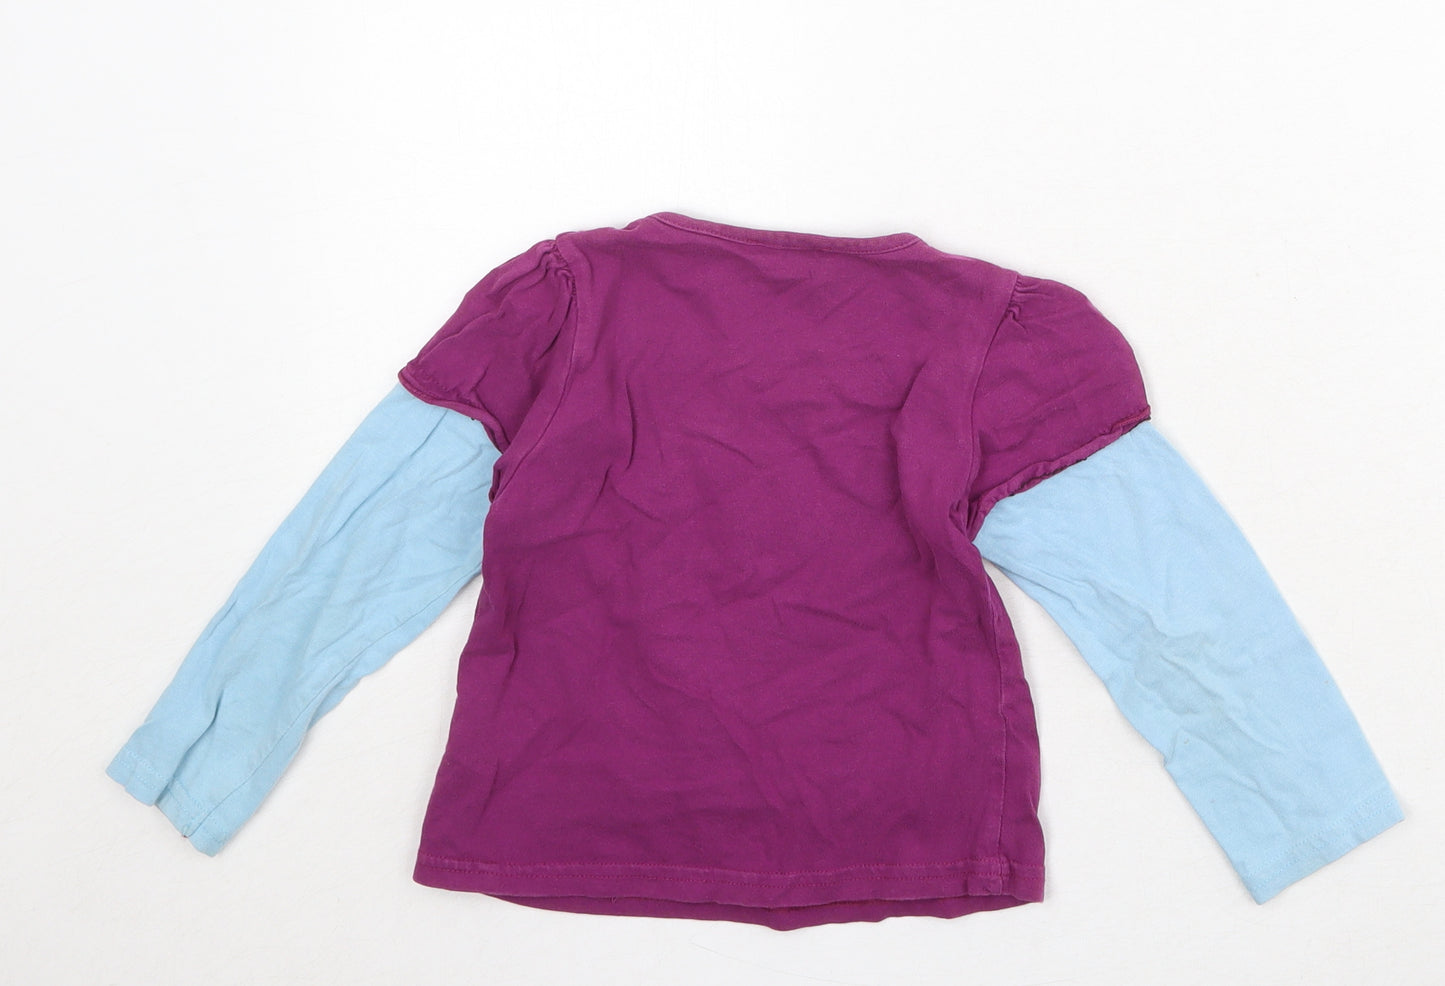 Ladybird Girls Purple 100% Cotton Basic Blouse Size 3-4 Years Round Neck Pullover - Flower Detail